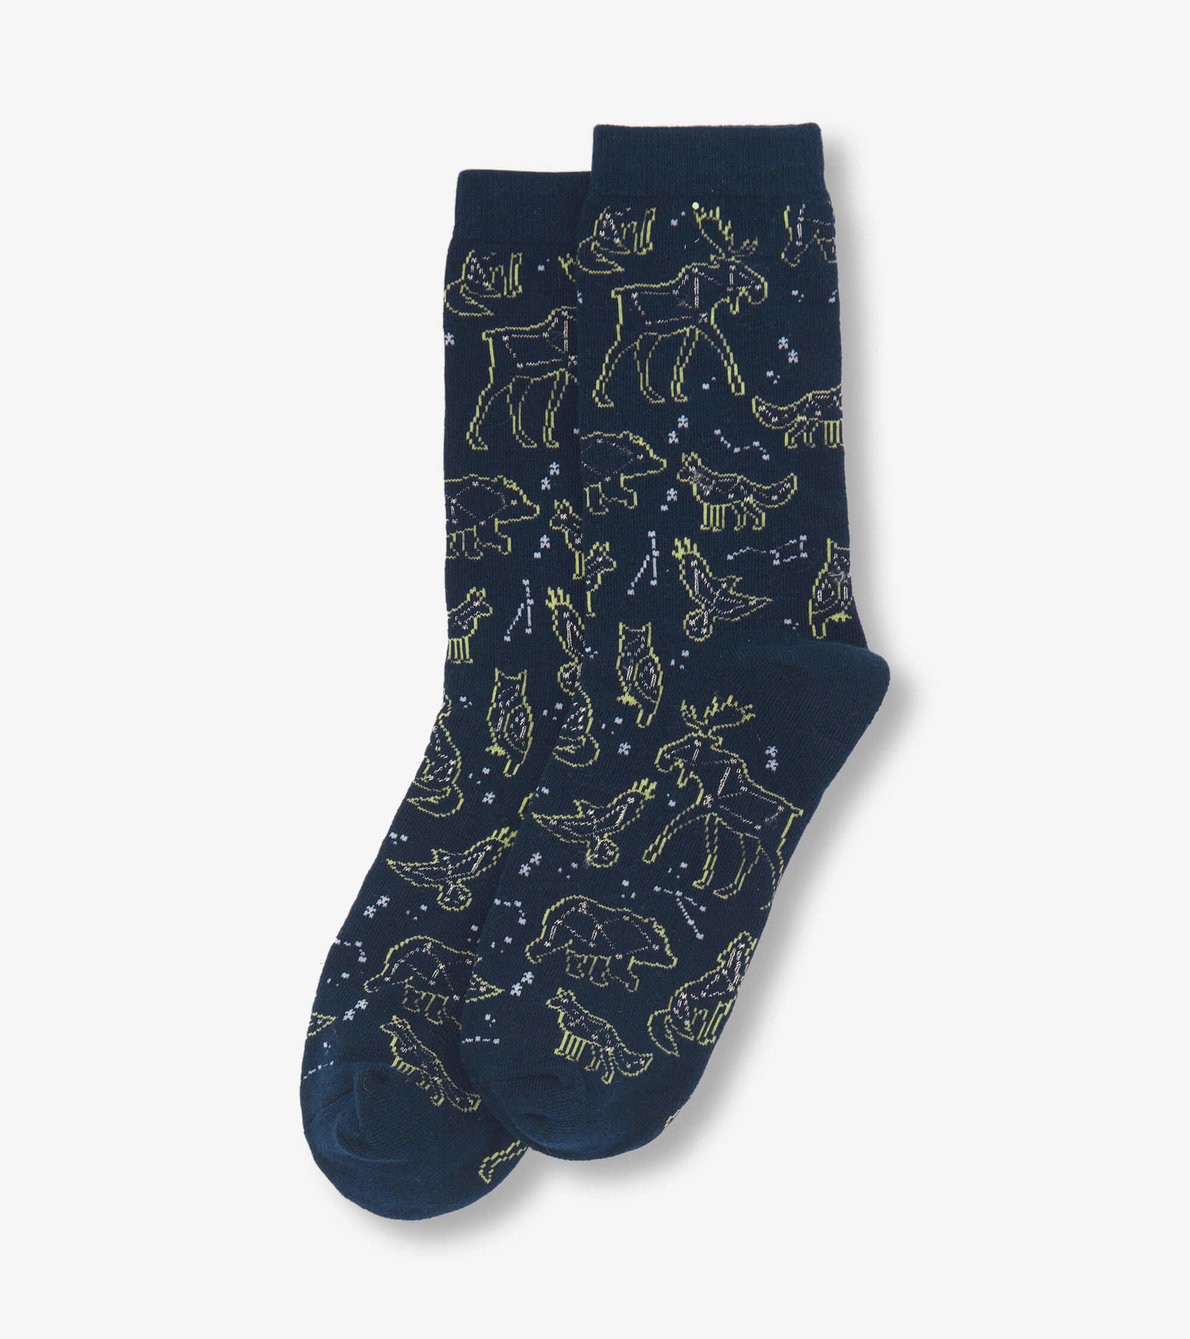 View larger image of Animal Constellations Men's Crew Socks